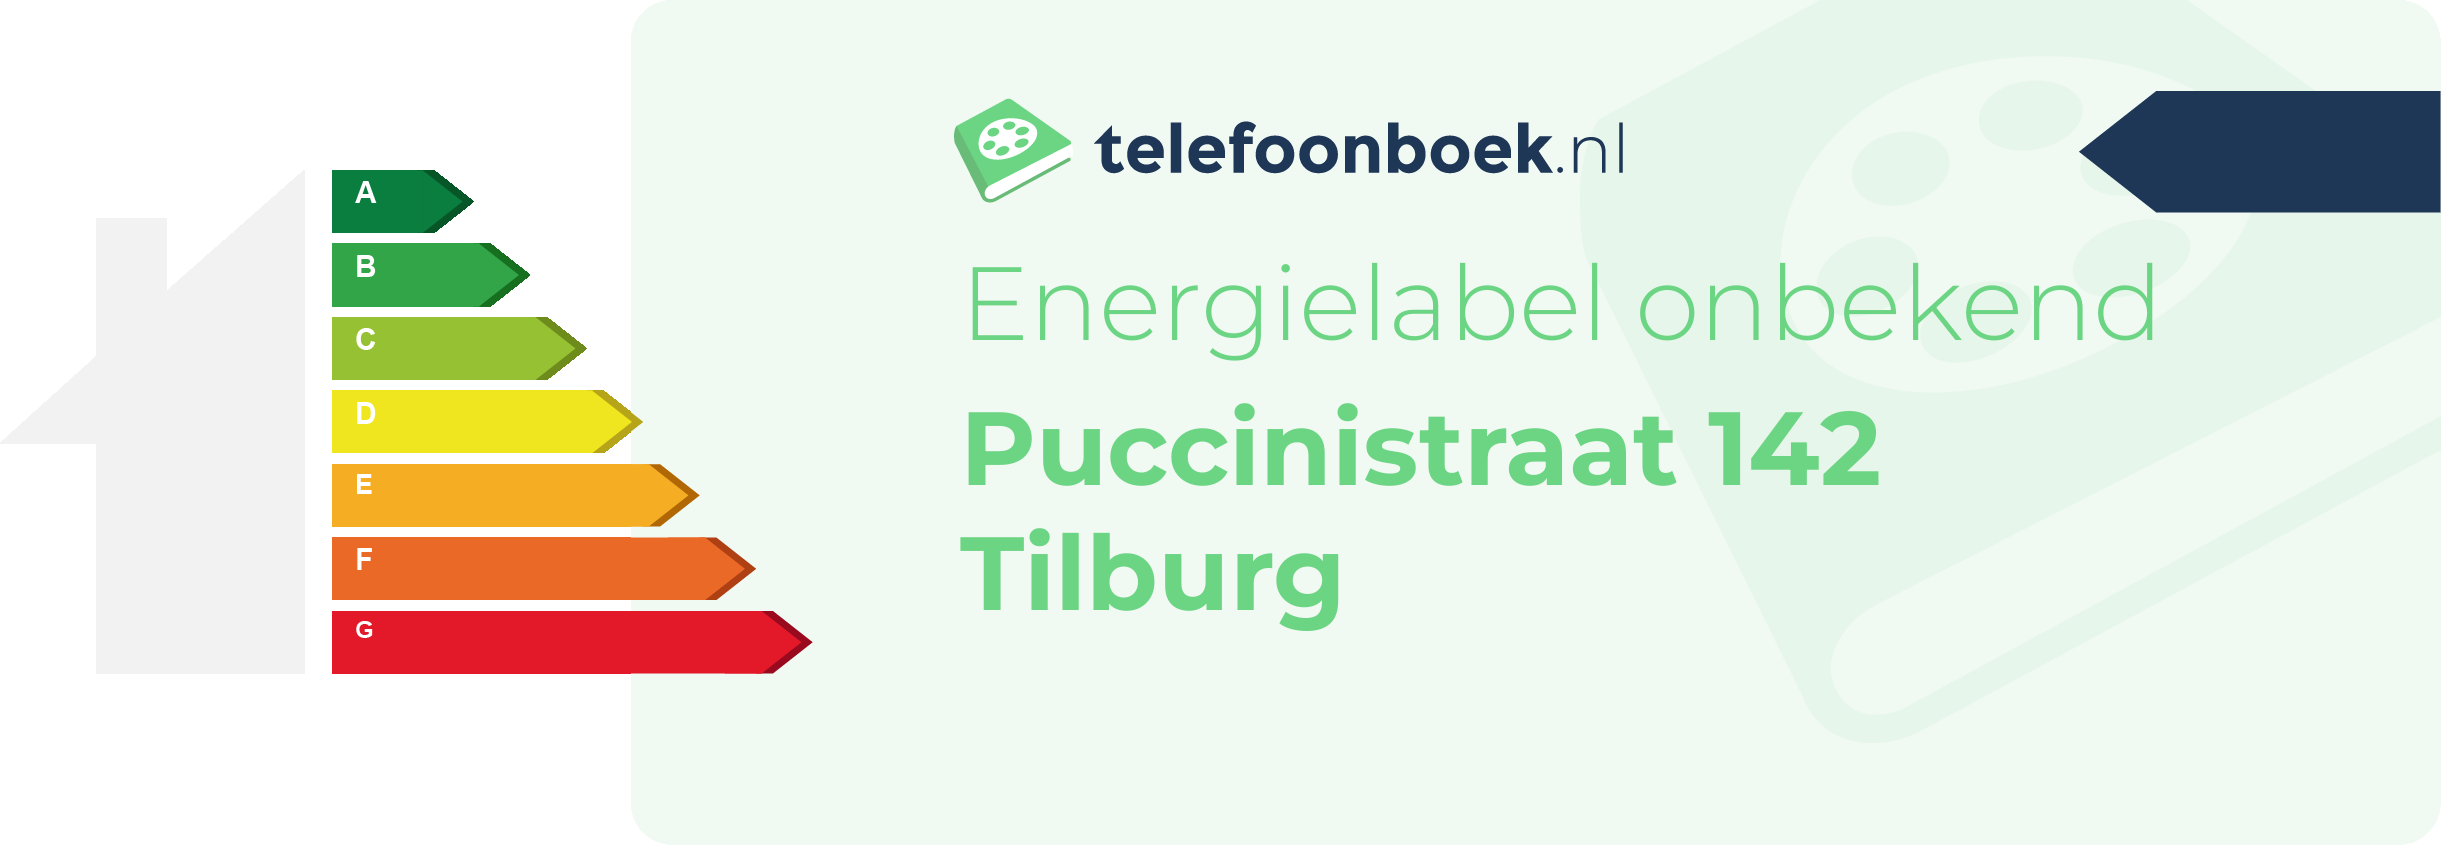 Energielabel Puccinistraat 142 Tilburg